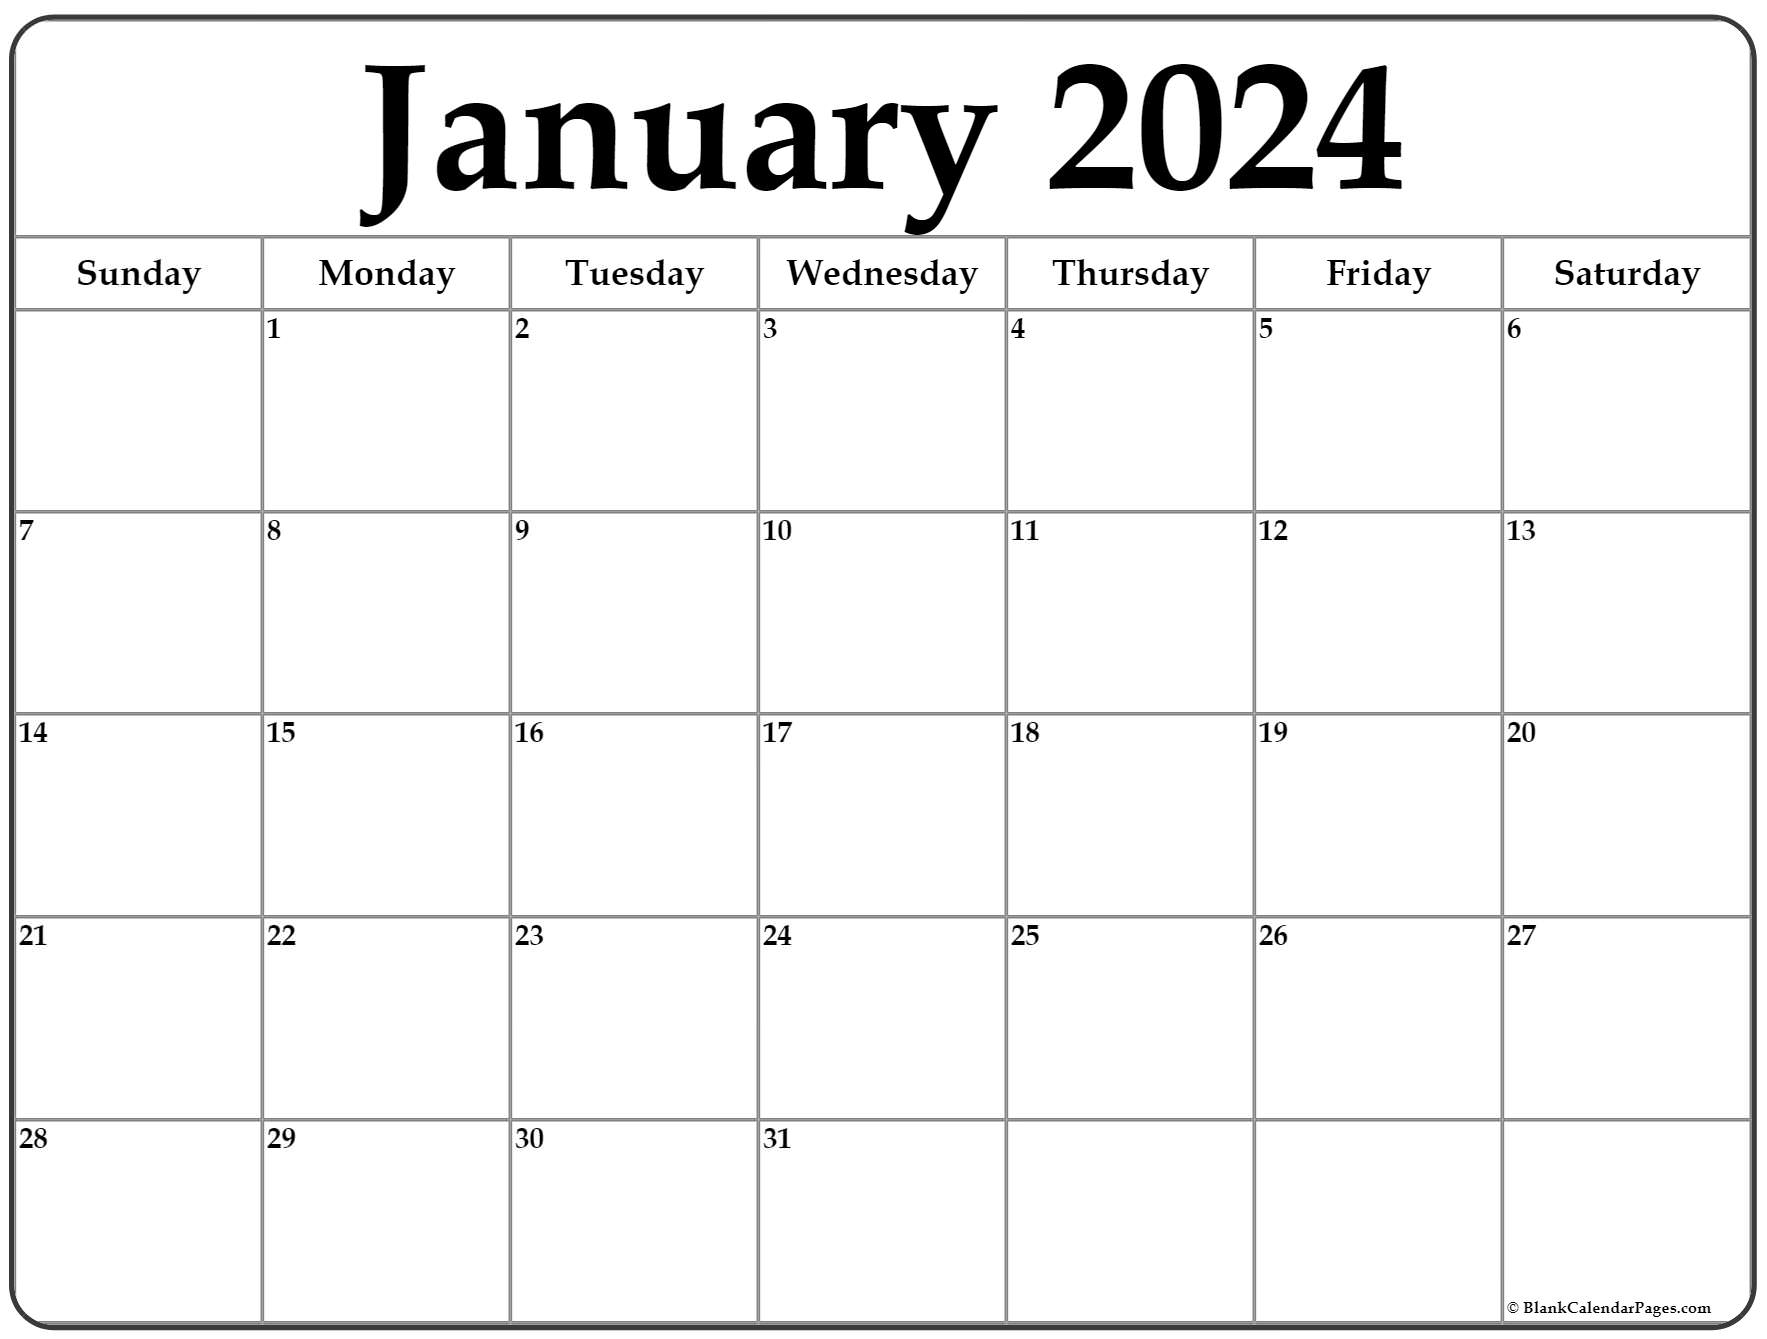 January 2024 Calendar | Free Printable Calendar for 2024 Printable Monthly Calendar